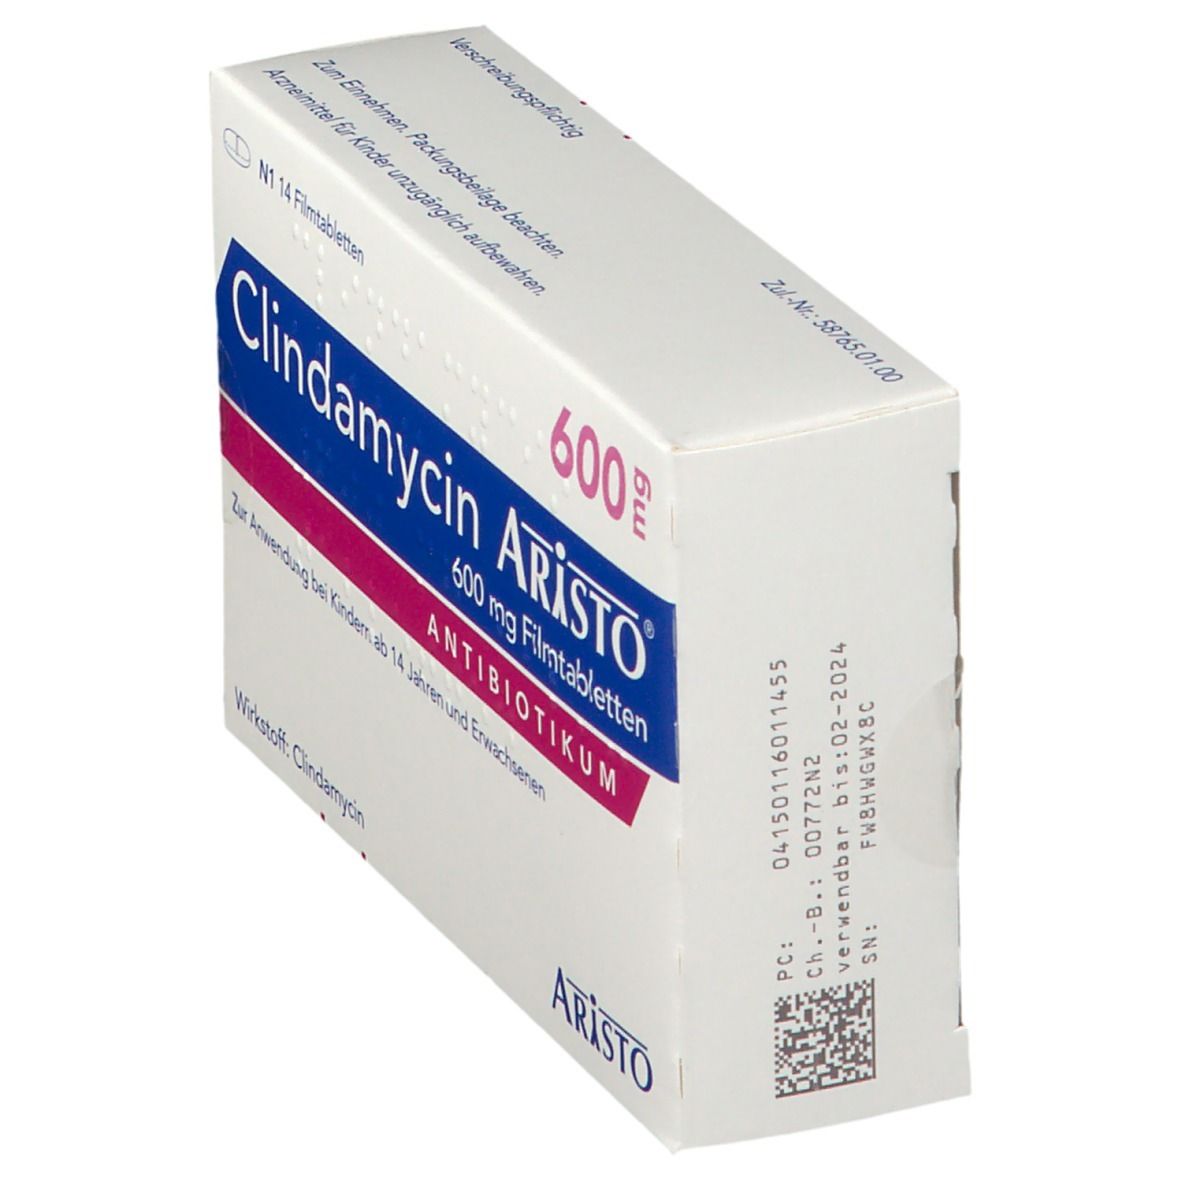 Clindamycin Aristo® 600 mg